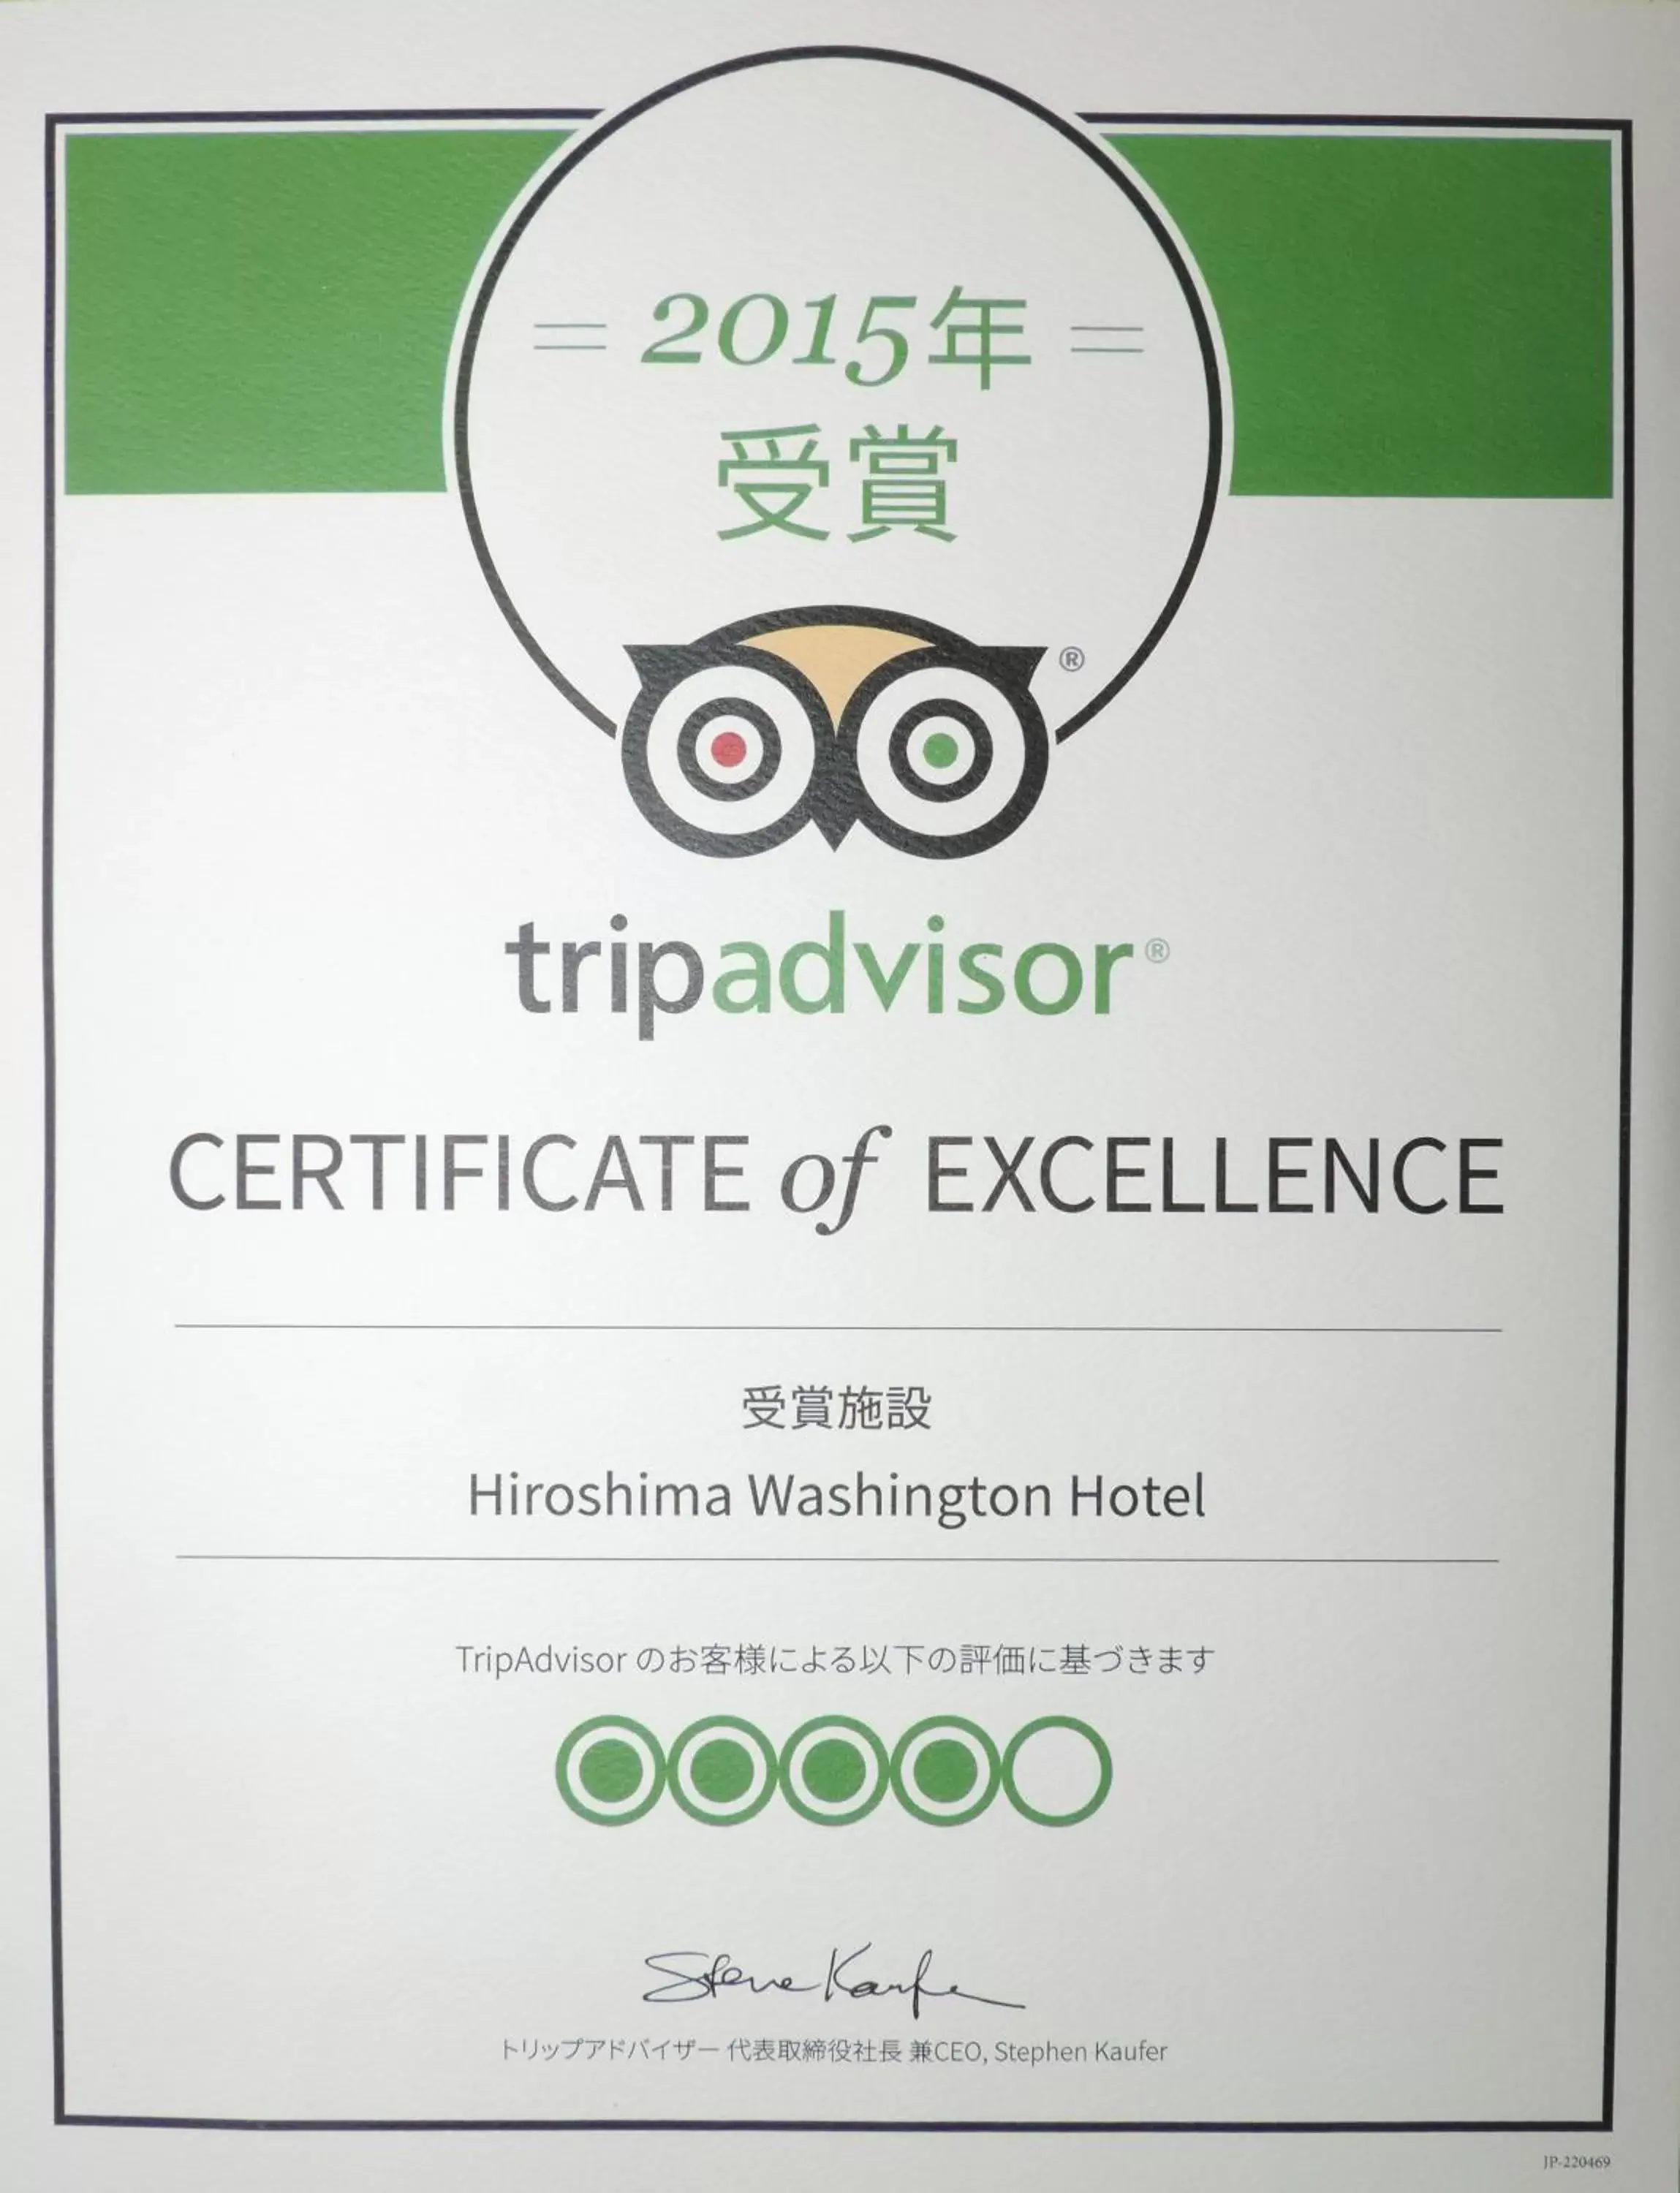 Other in Hiroshima Washington Hotel